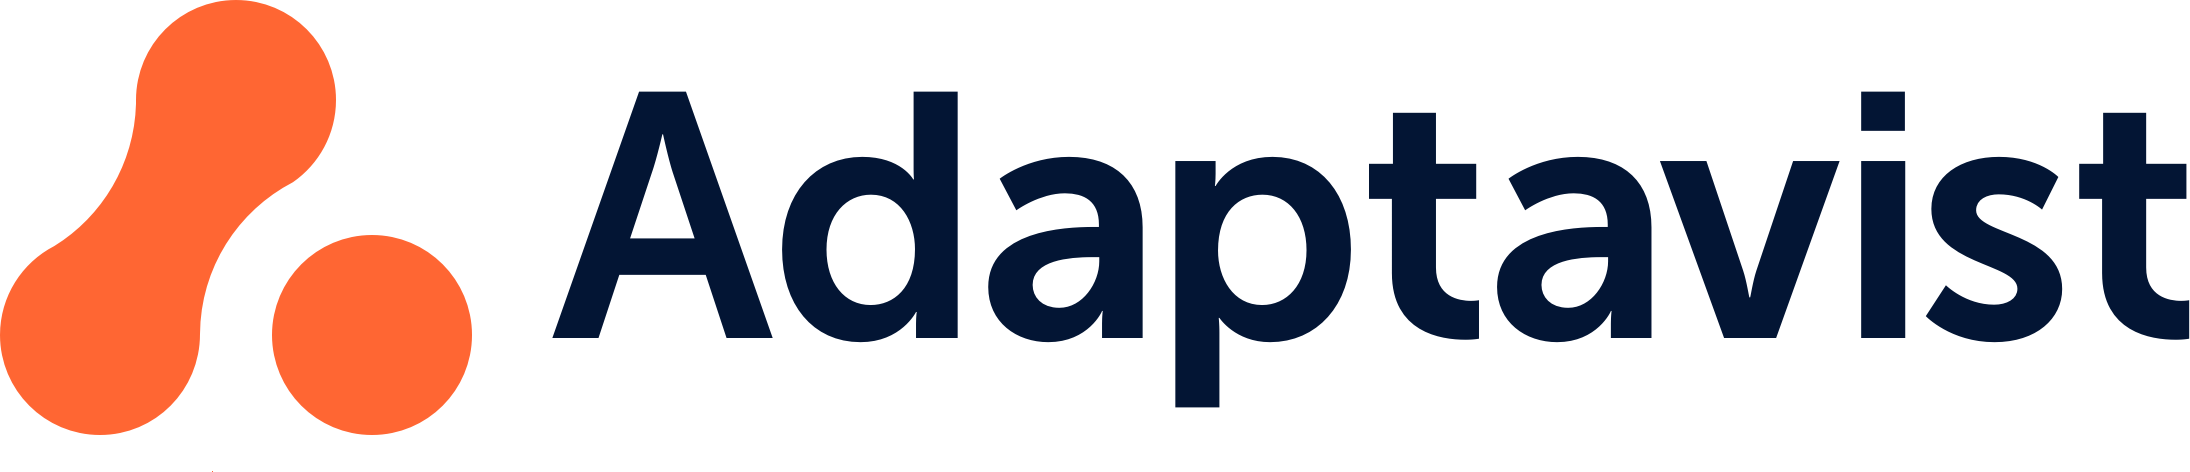 Logotipo Adaptavist